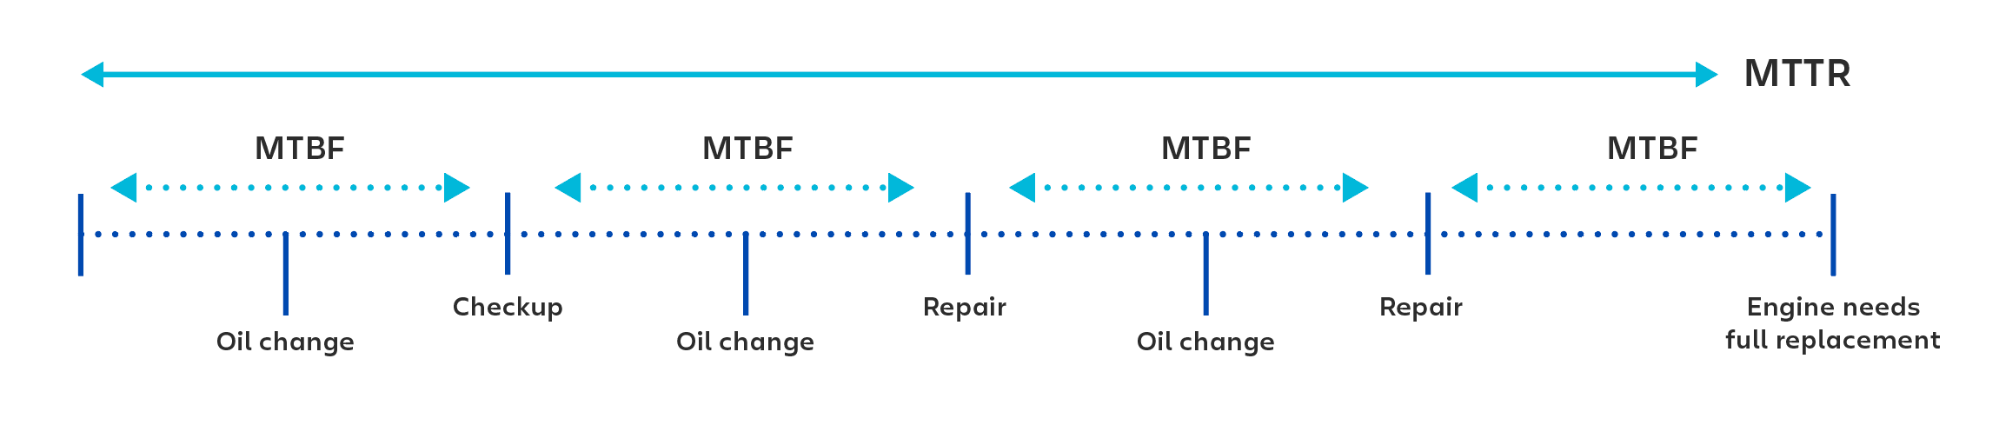 MTBF, MTTR, MTTF, MTTA: Understanding metrics